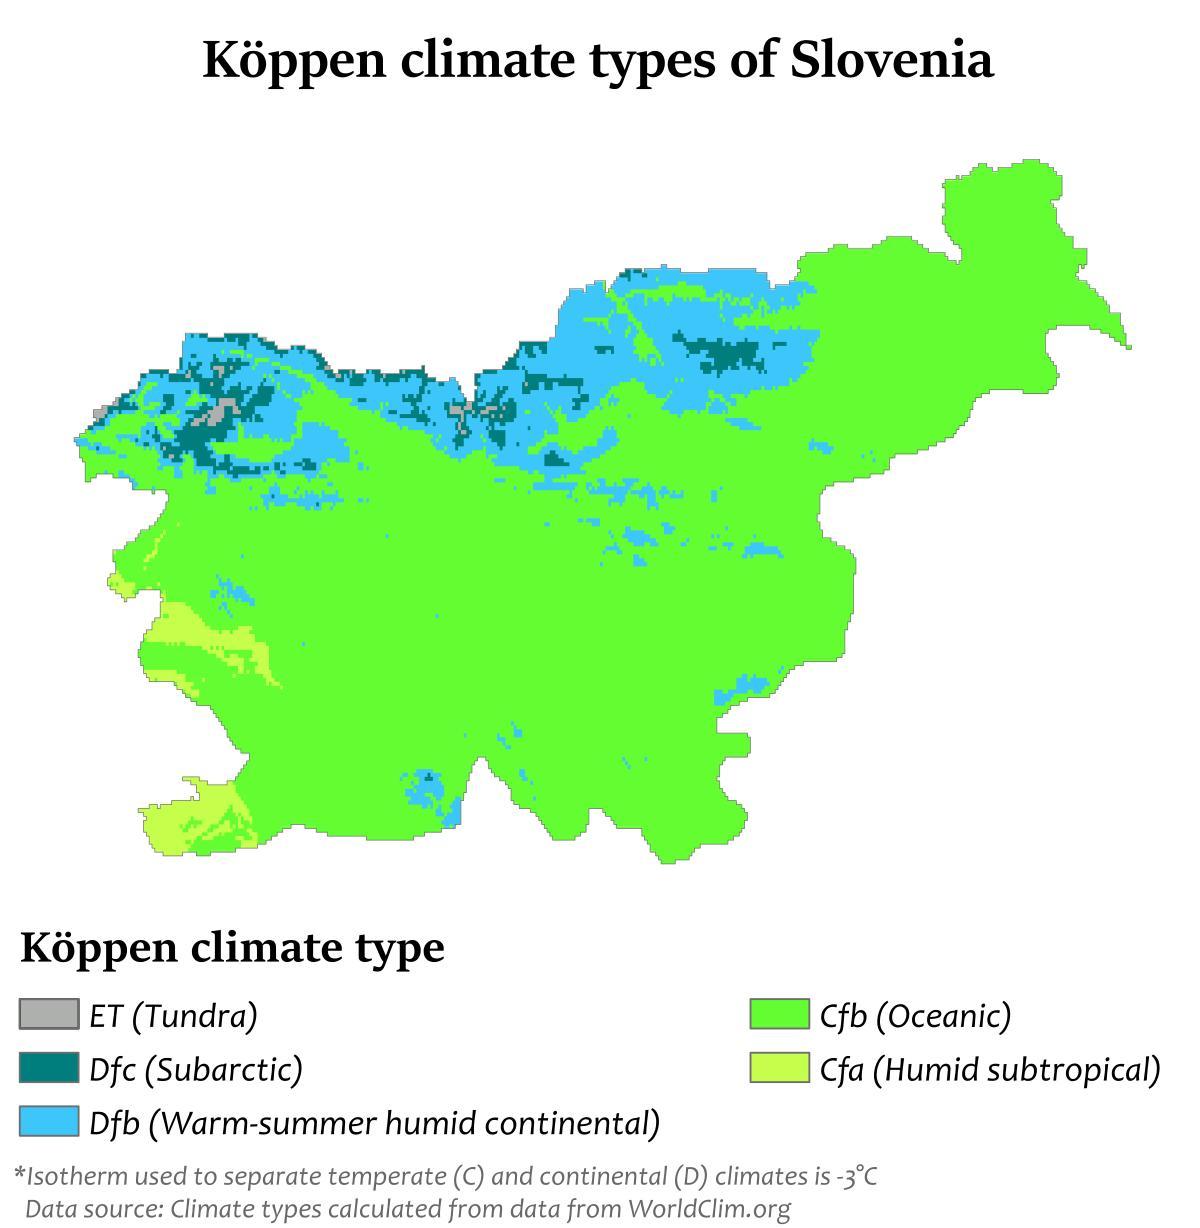 Mapa de temperatura de Eslovenia